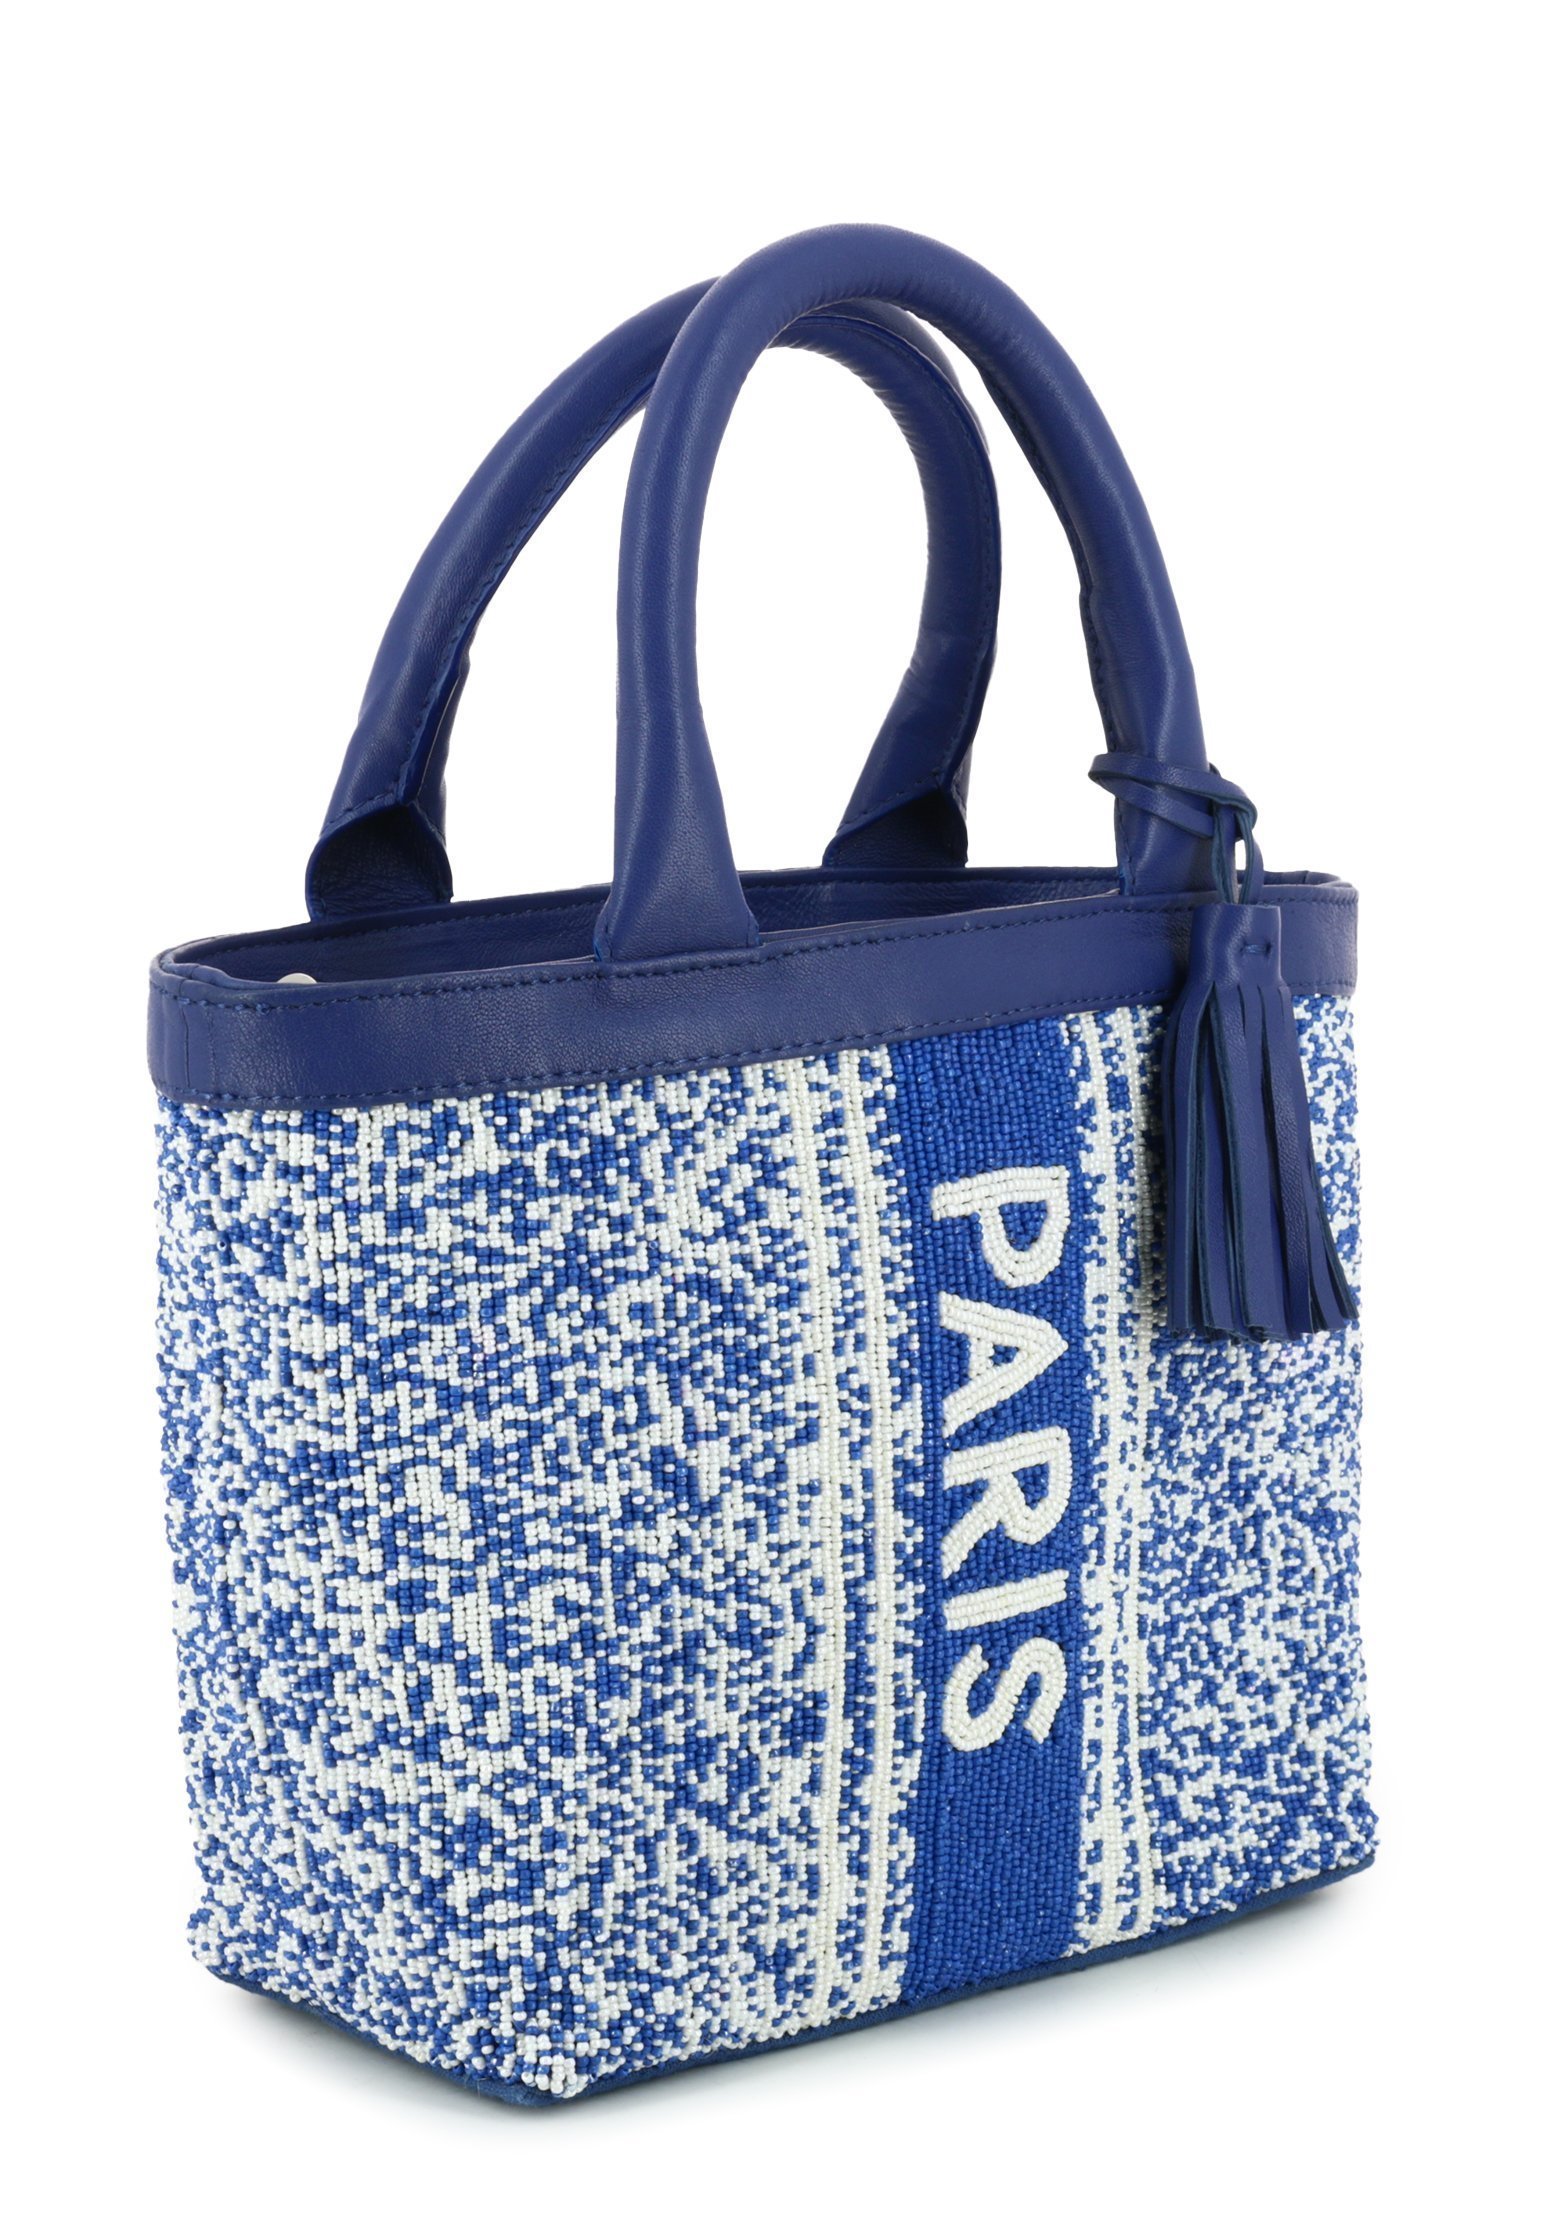 Bag DE SIENA Color: blue (Code: 2334) in online store Allure